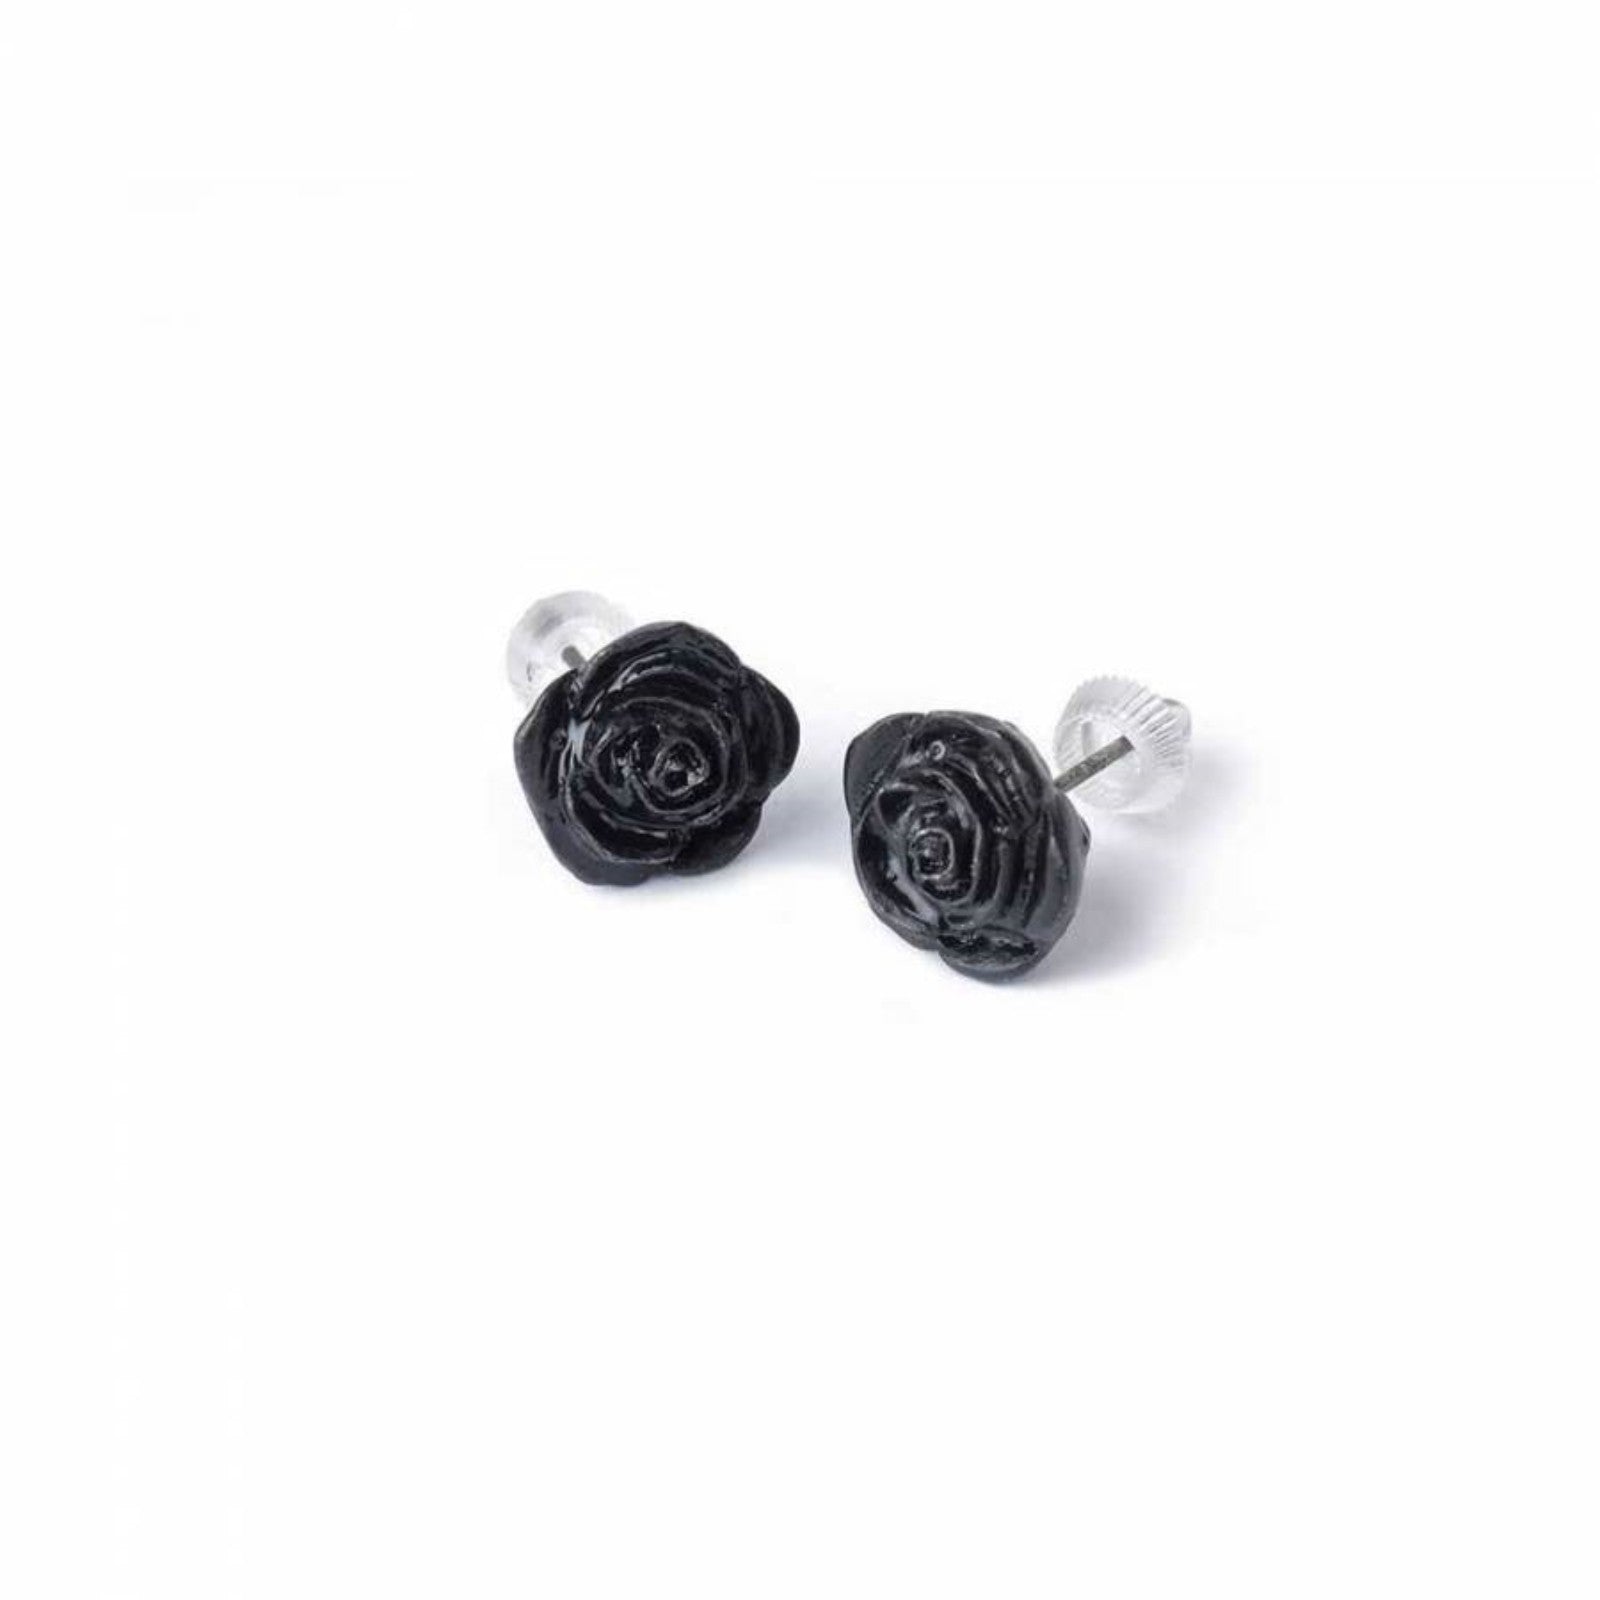 Alchemy England Romance of Black Rose Earrings (Pair)